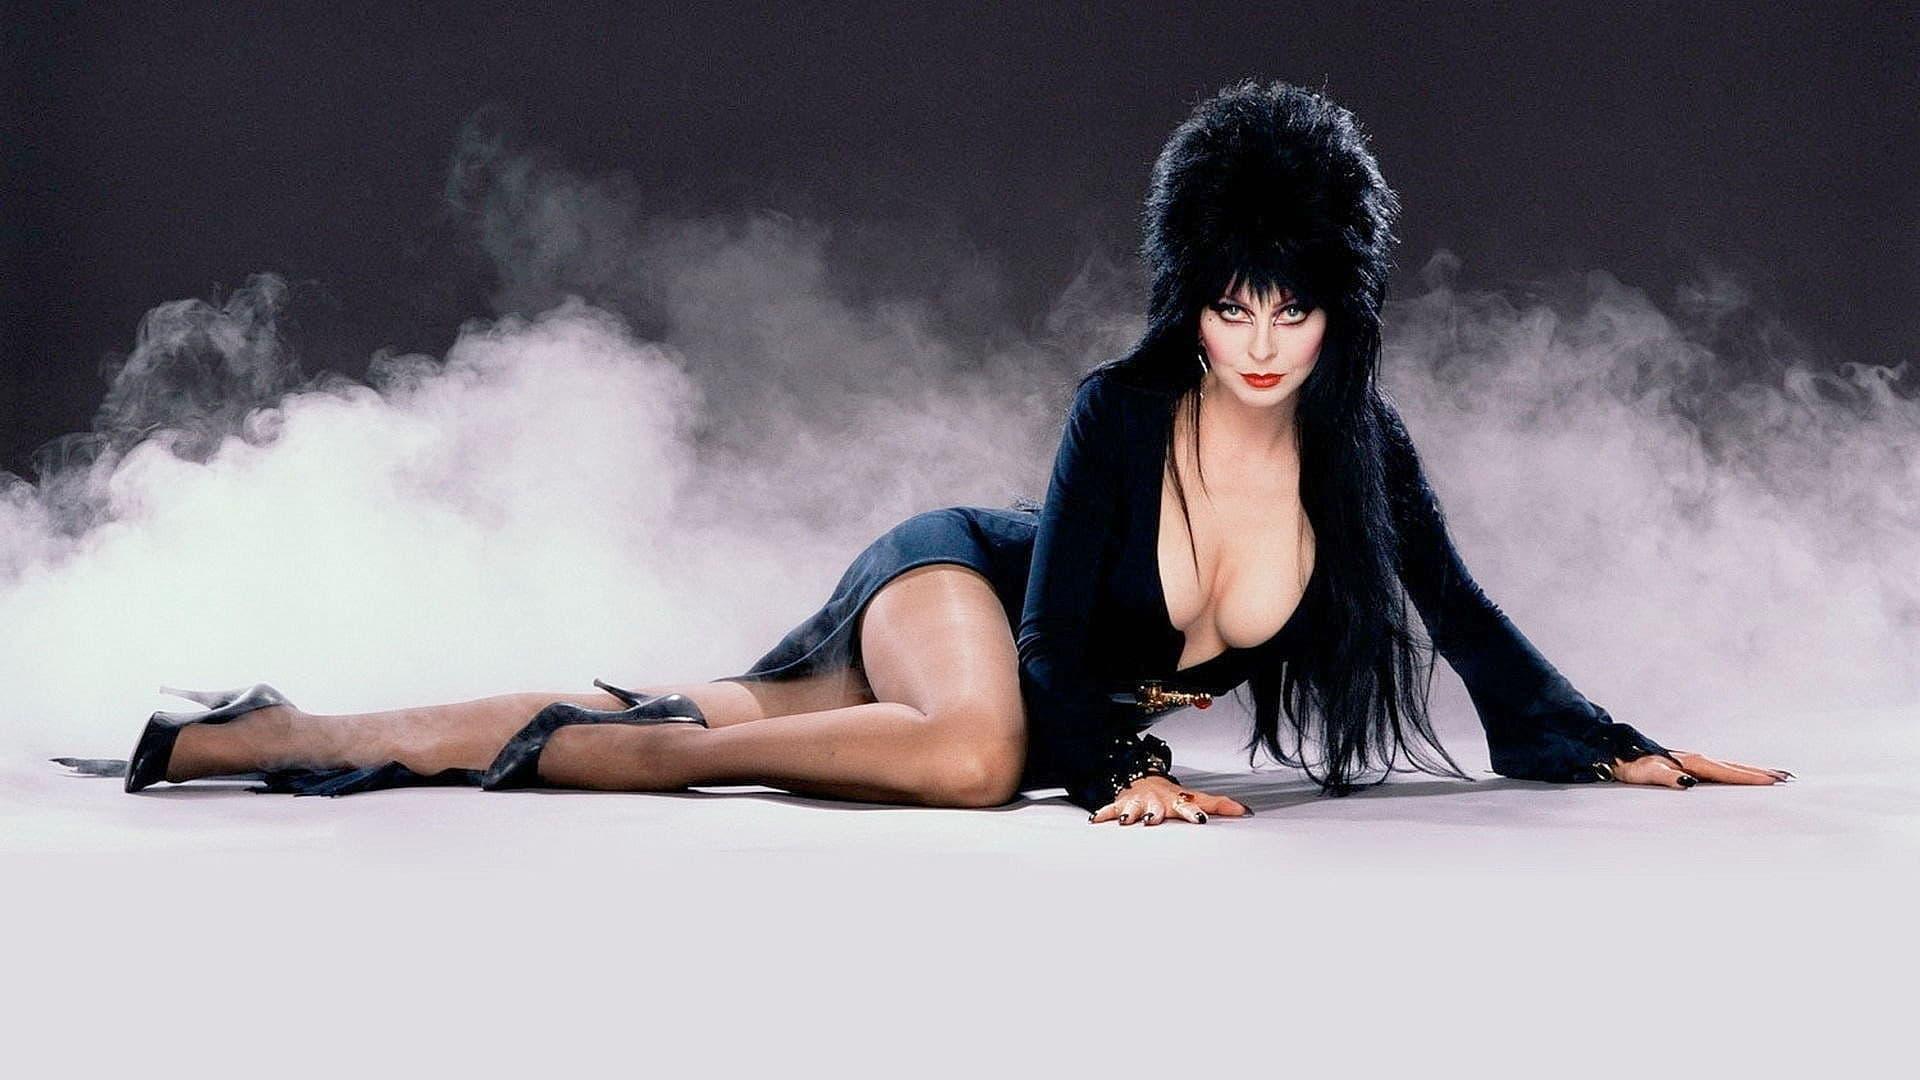 The Elvira Show backdrop